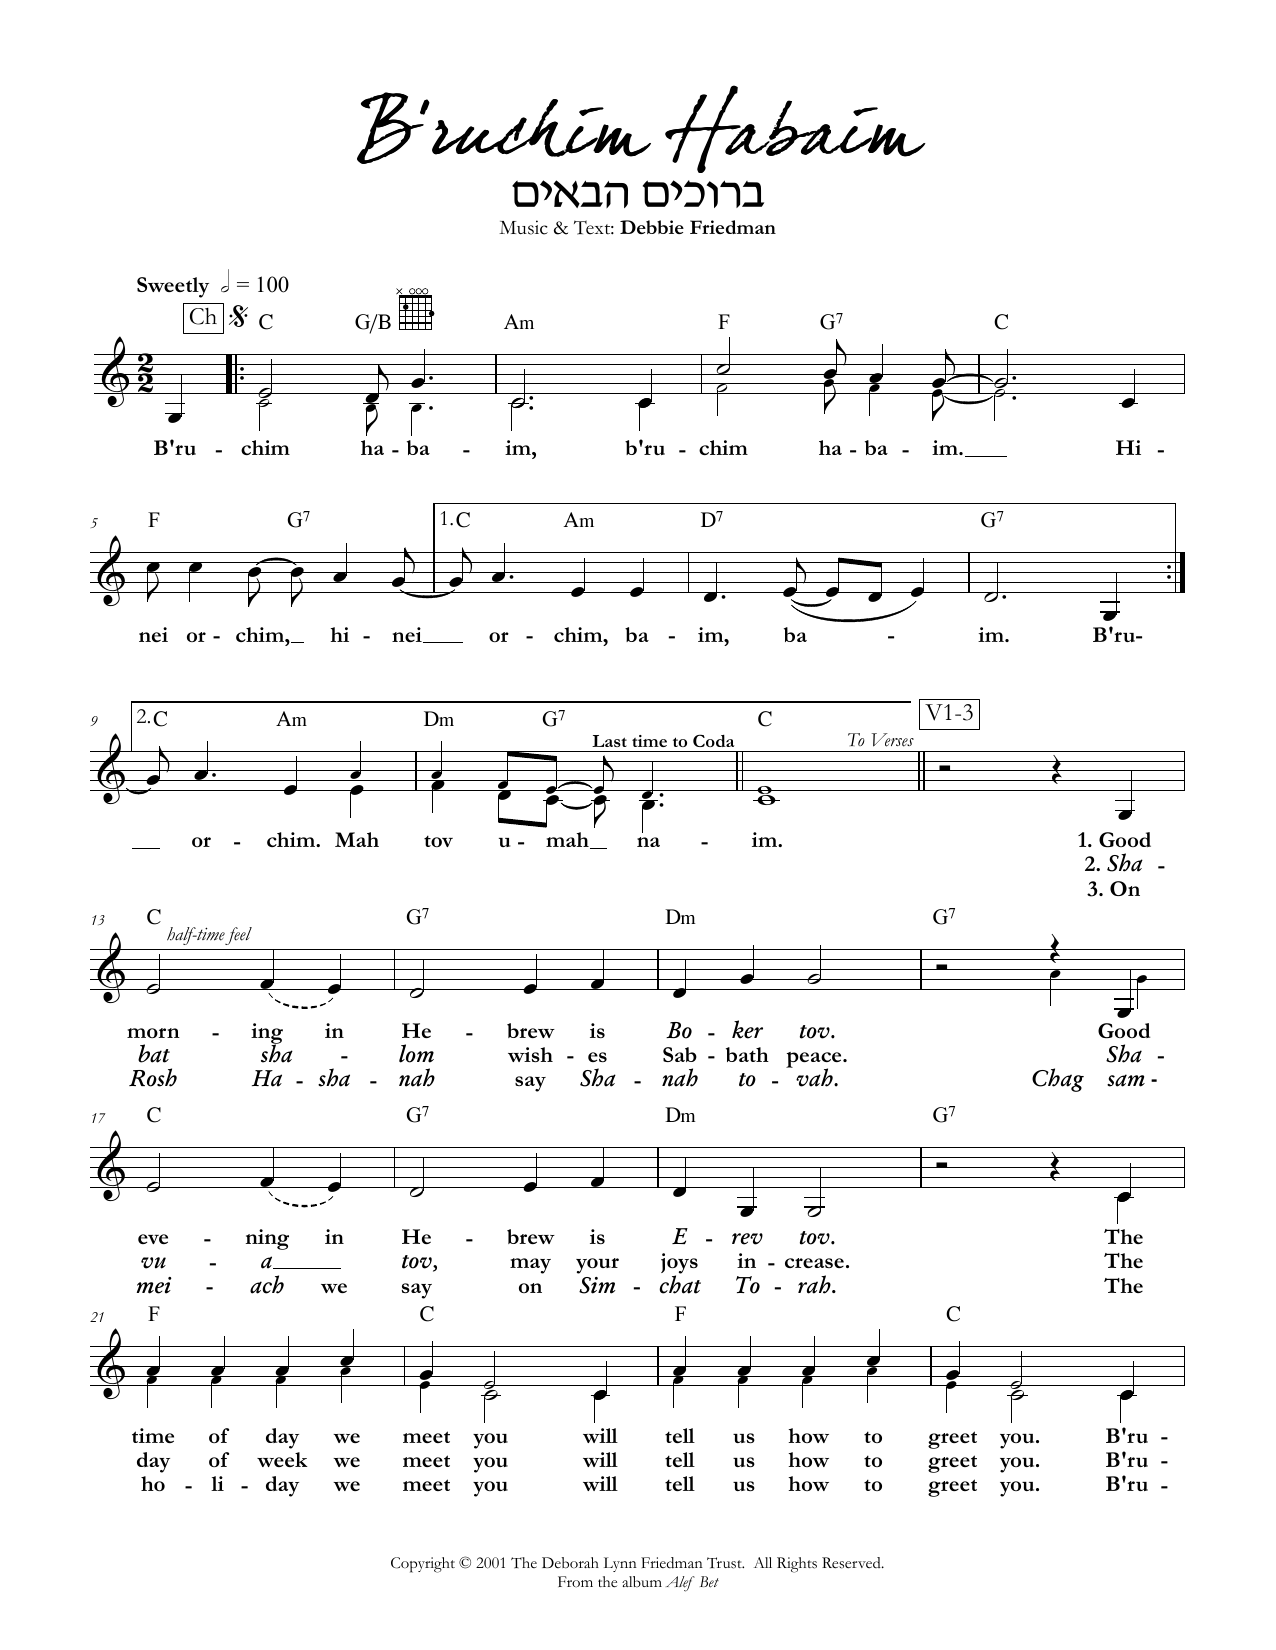 Download Debbie Friedman B'ruchim Habaim Sheet Music and learn how to play Lead Sheet / Fake Book PDF digital score in minutes